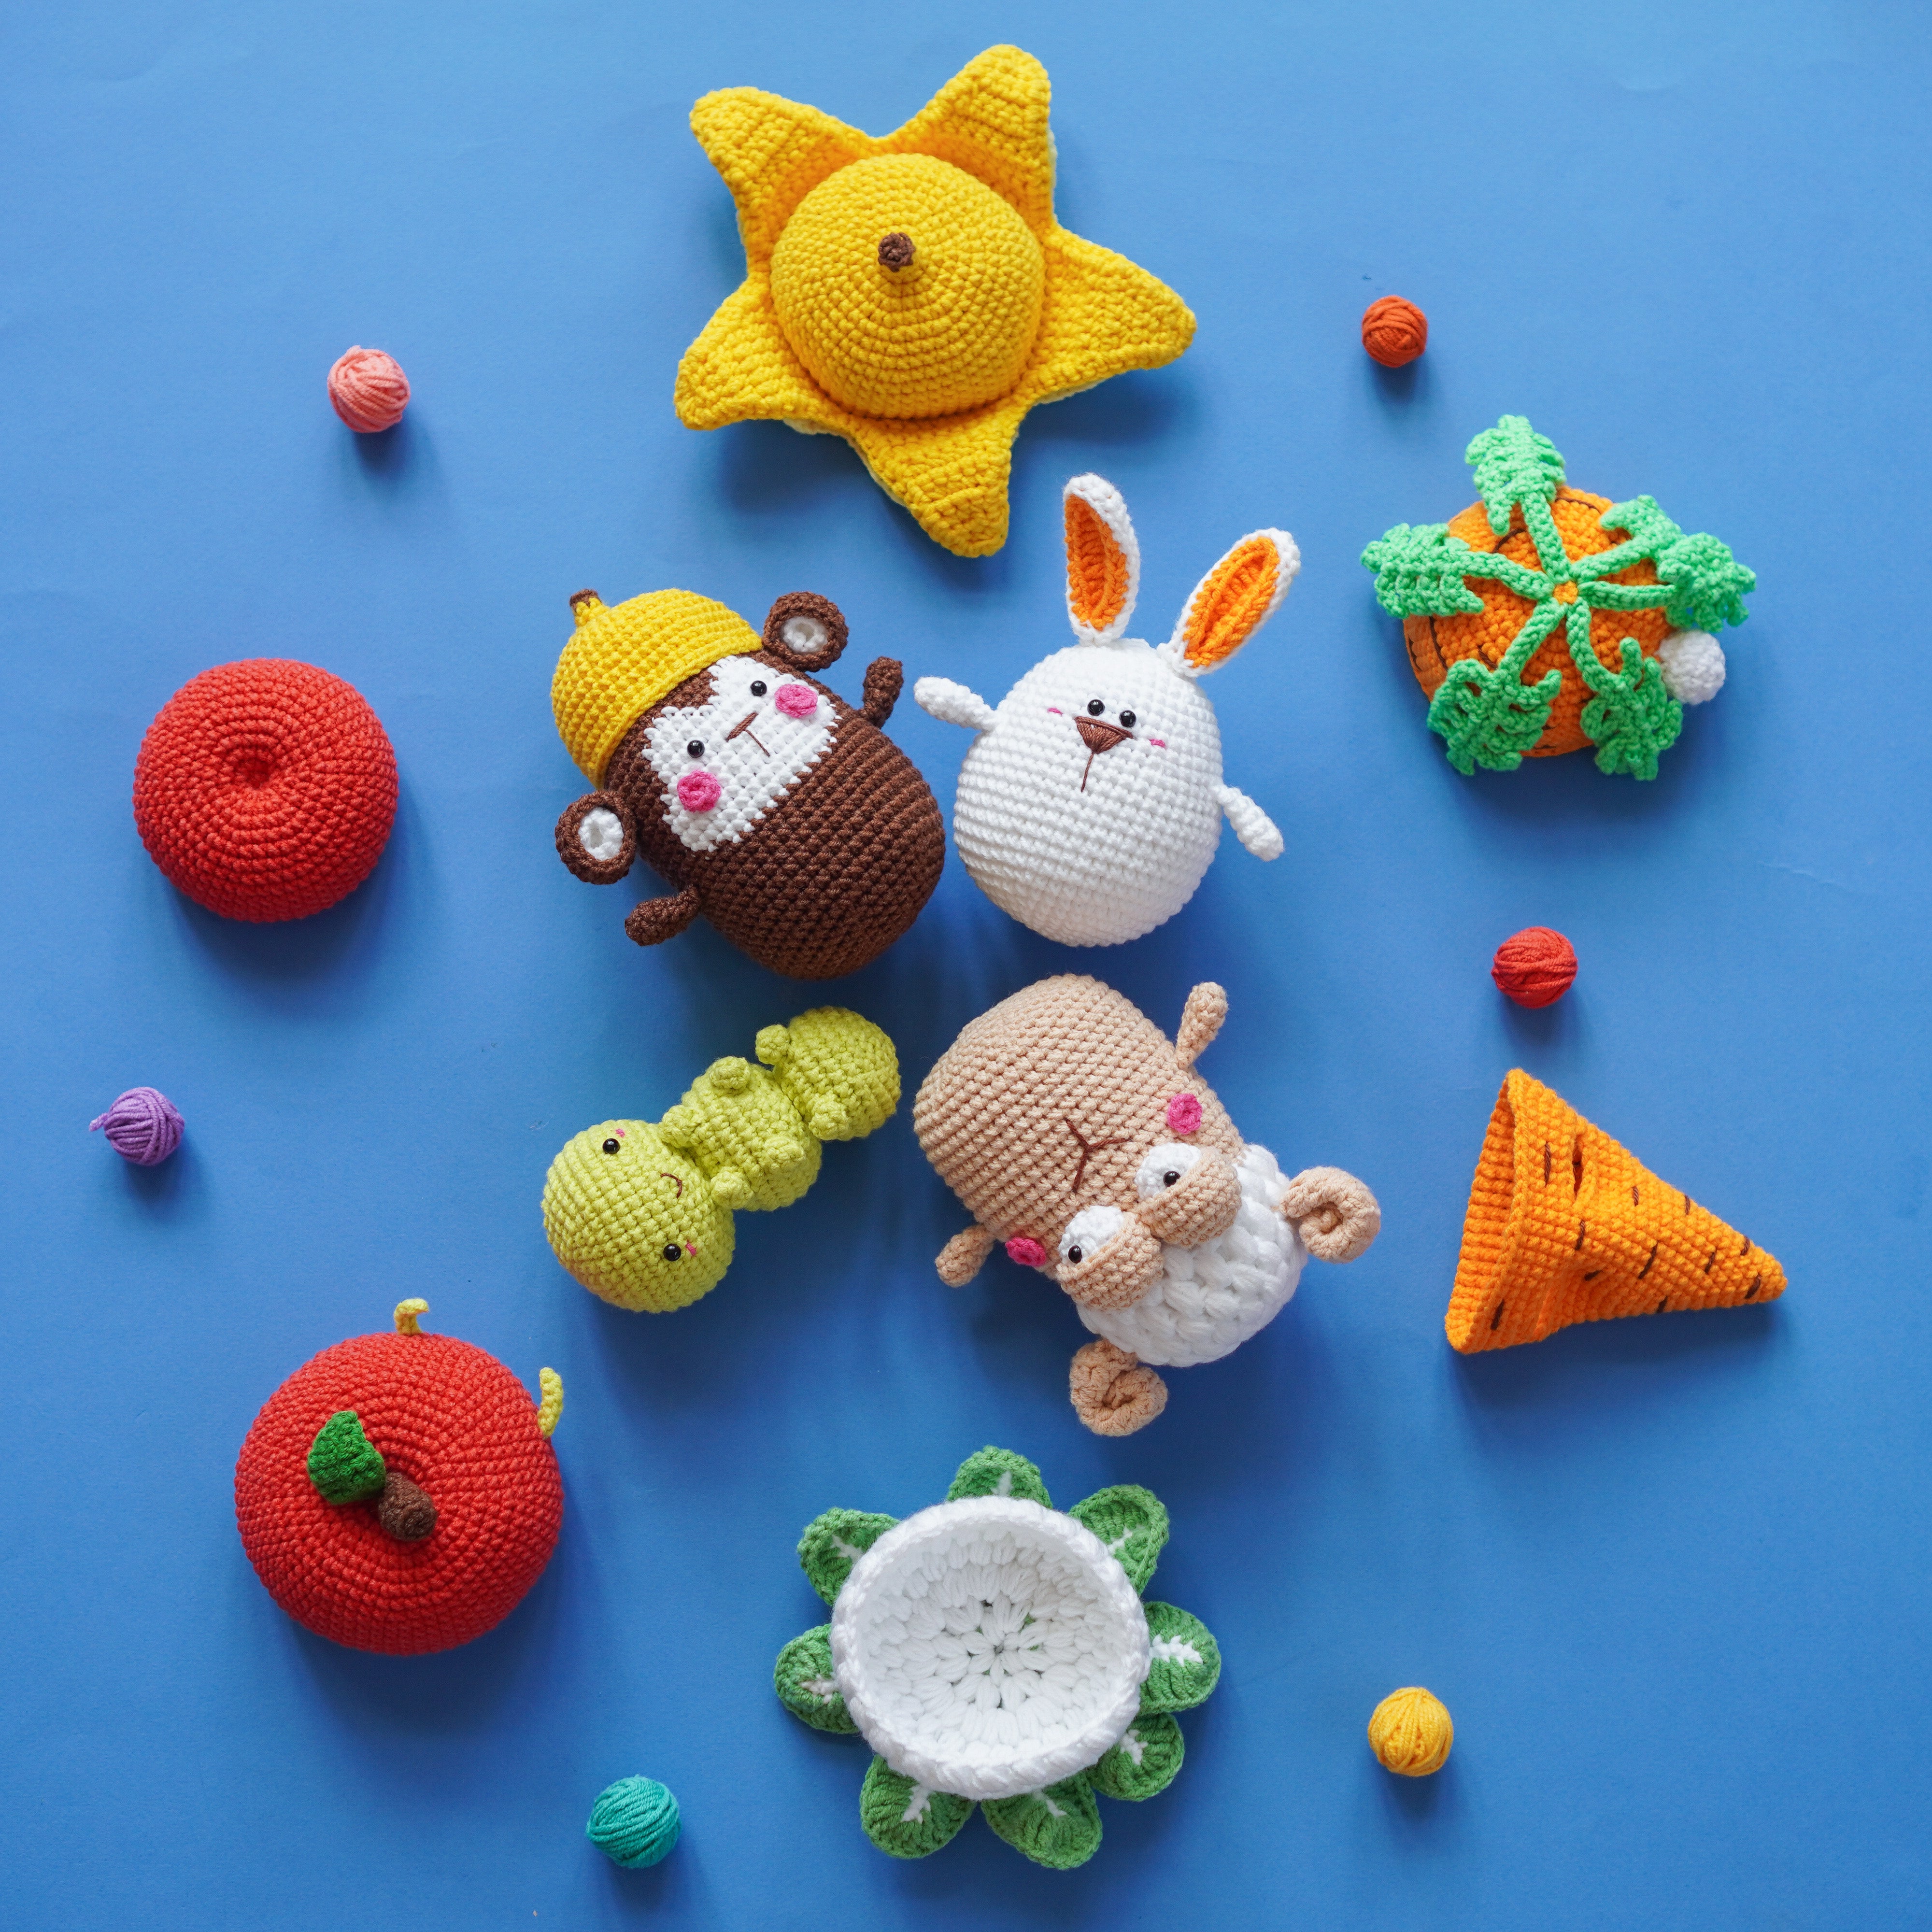 Vegetable Cosplay: Carrot Bunny, Cauliflower Sheep, Banana Monkey & Apple Worm Crochet Pattern by Aquariwool Crochet (Crochet Doll Pattern/Amigurumi Pattern for Baby gift)